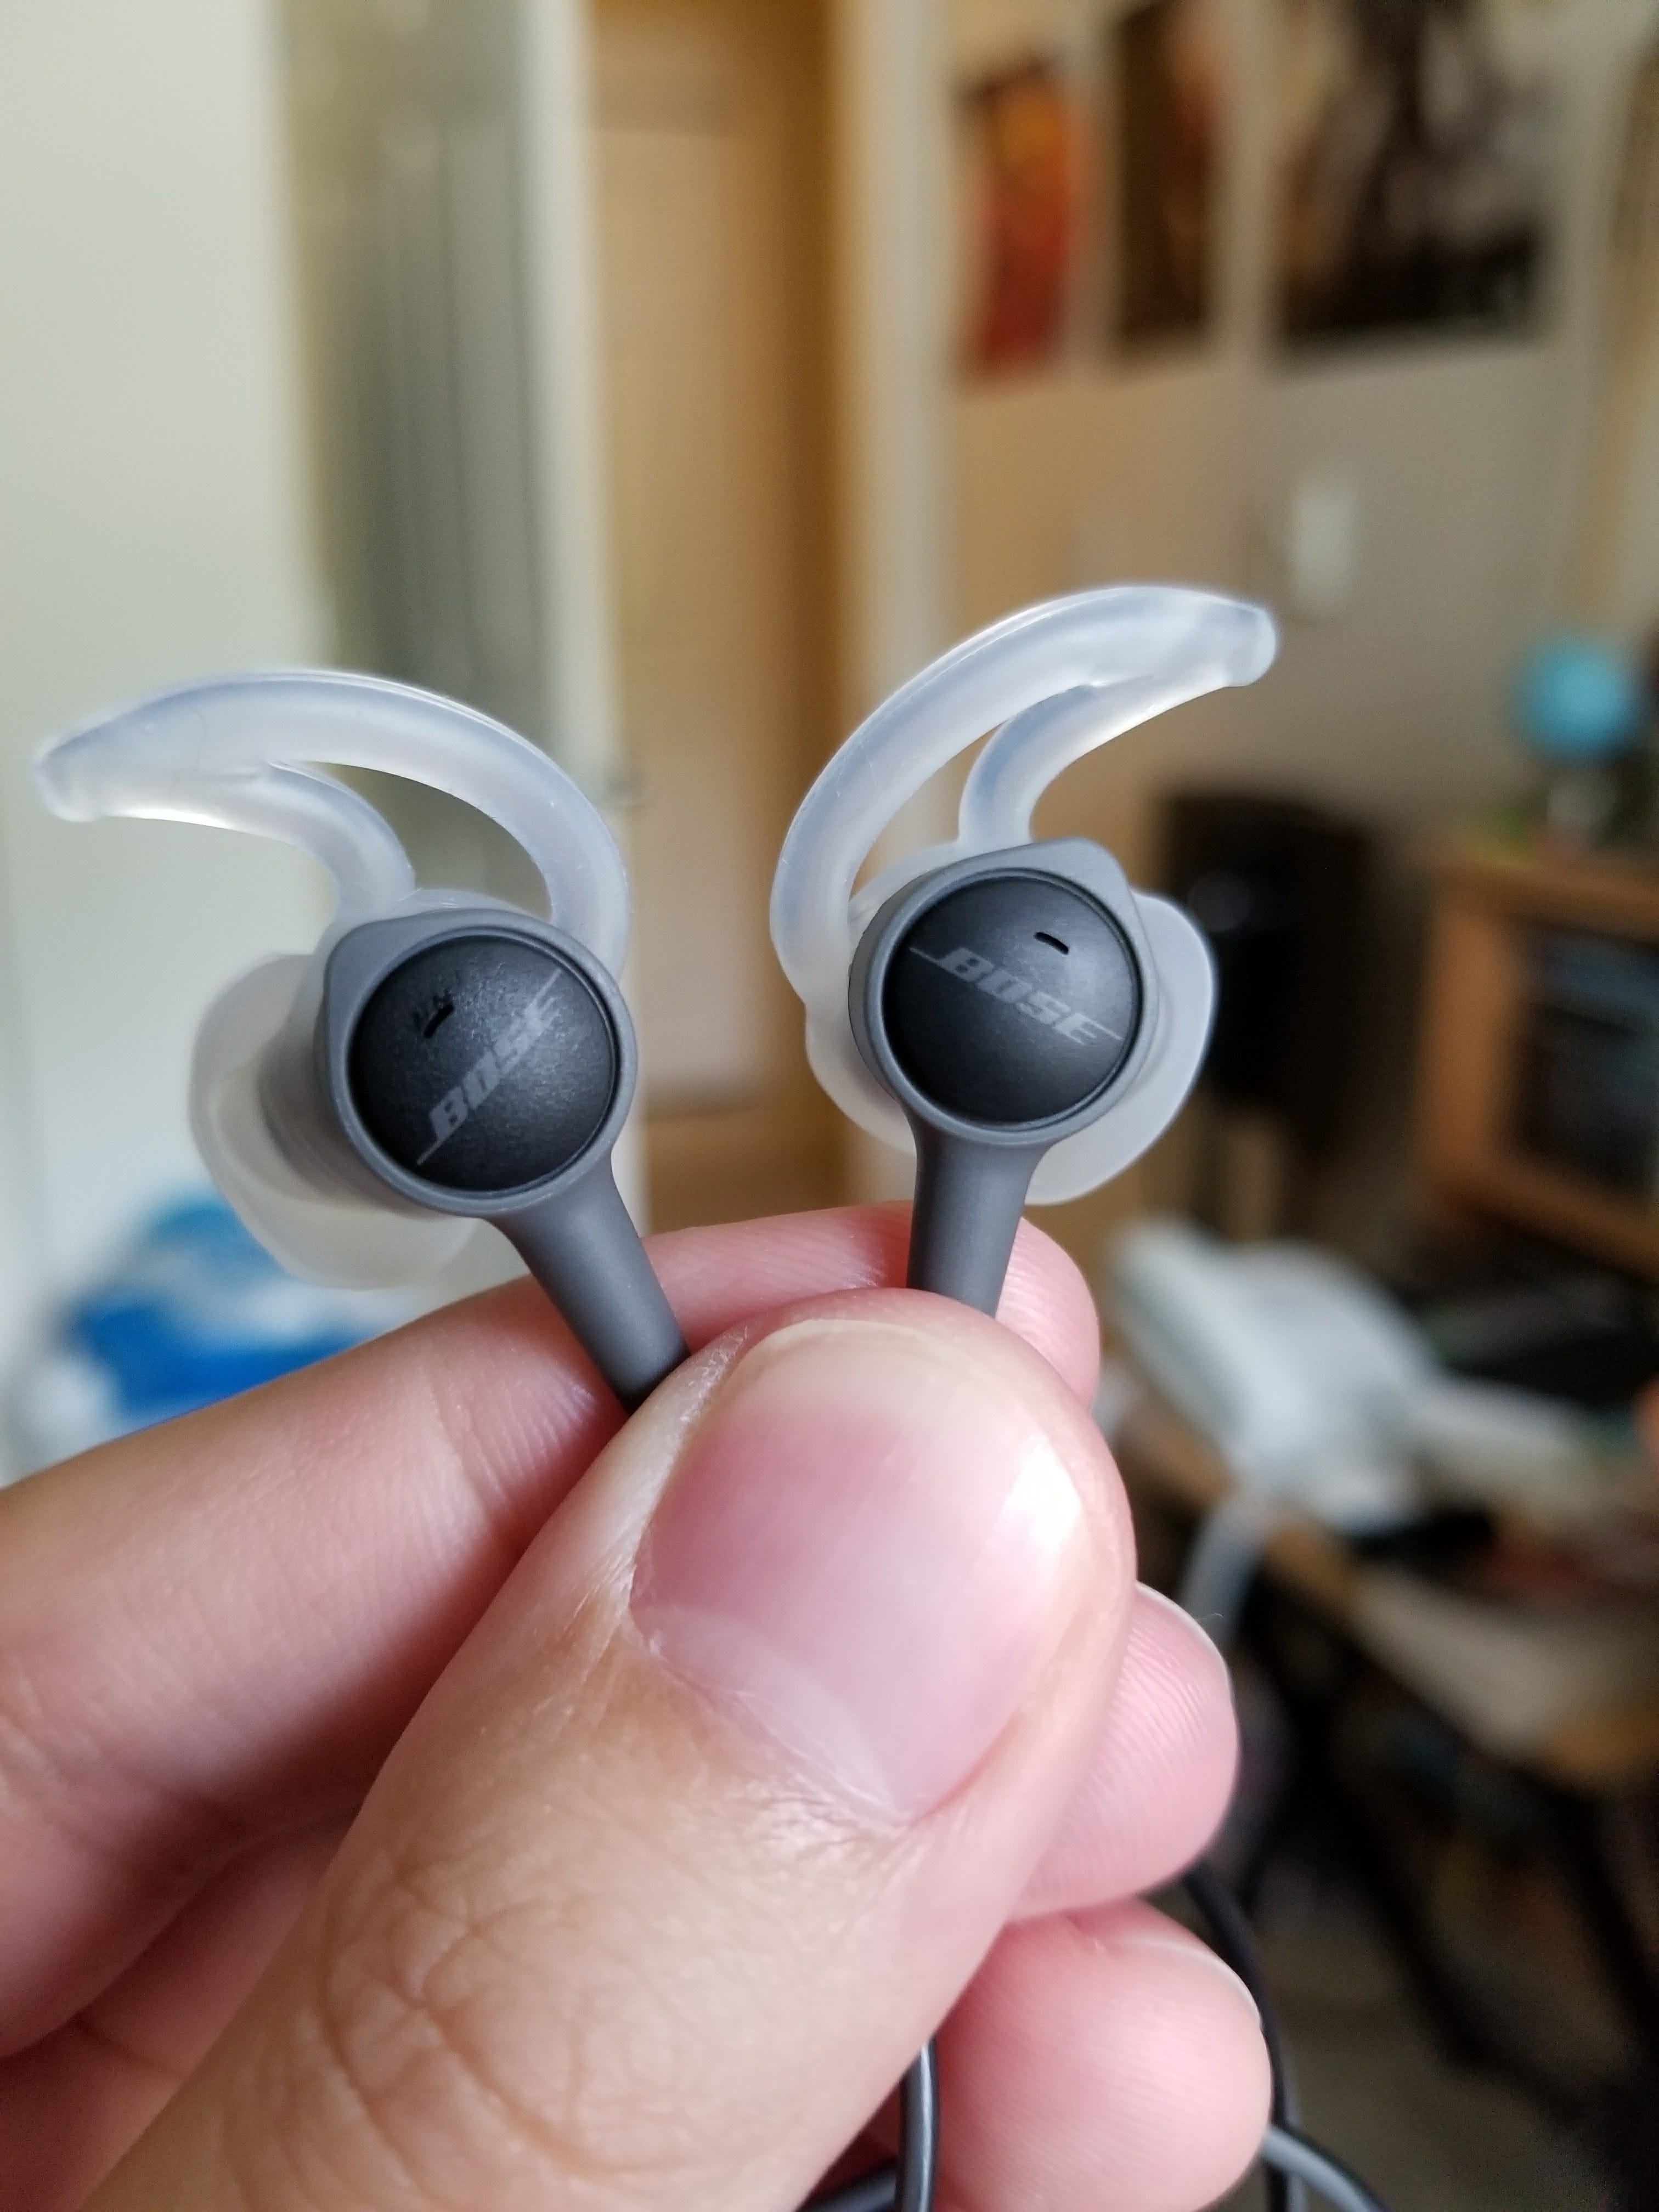 Bose SoundTrue Ultra In-Ear Headphones Review: The hidden gem of Bose’s